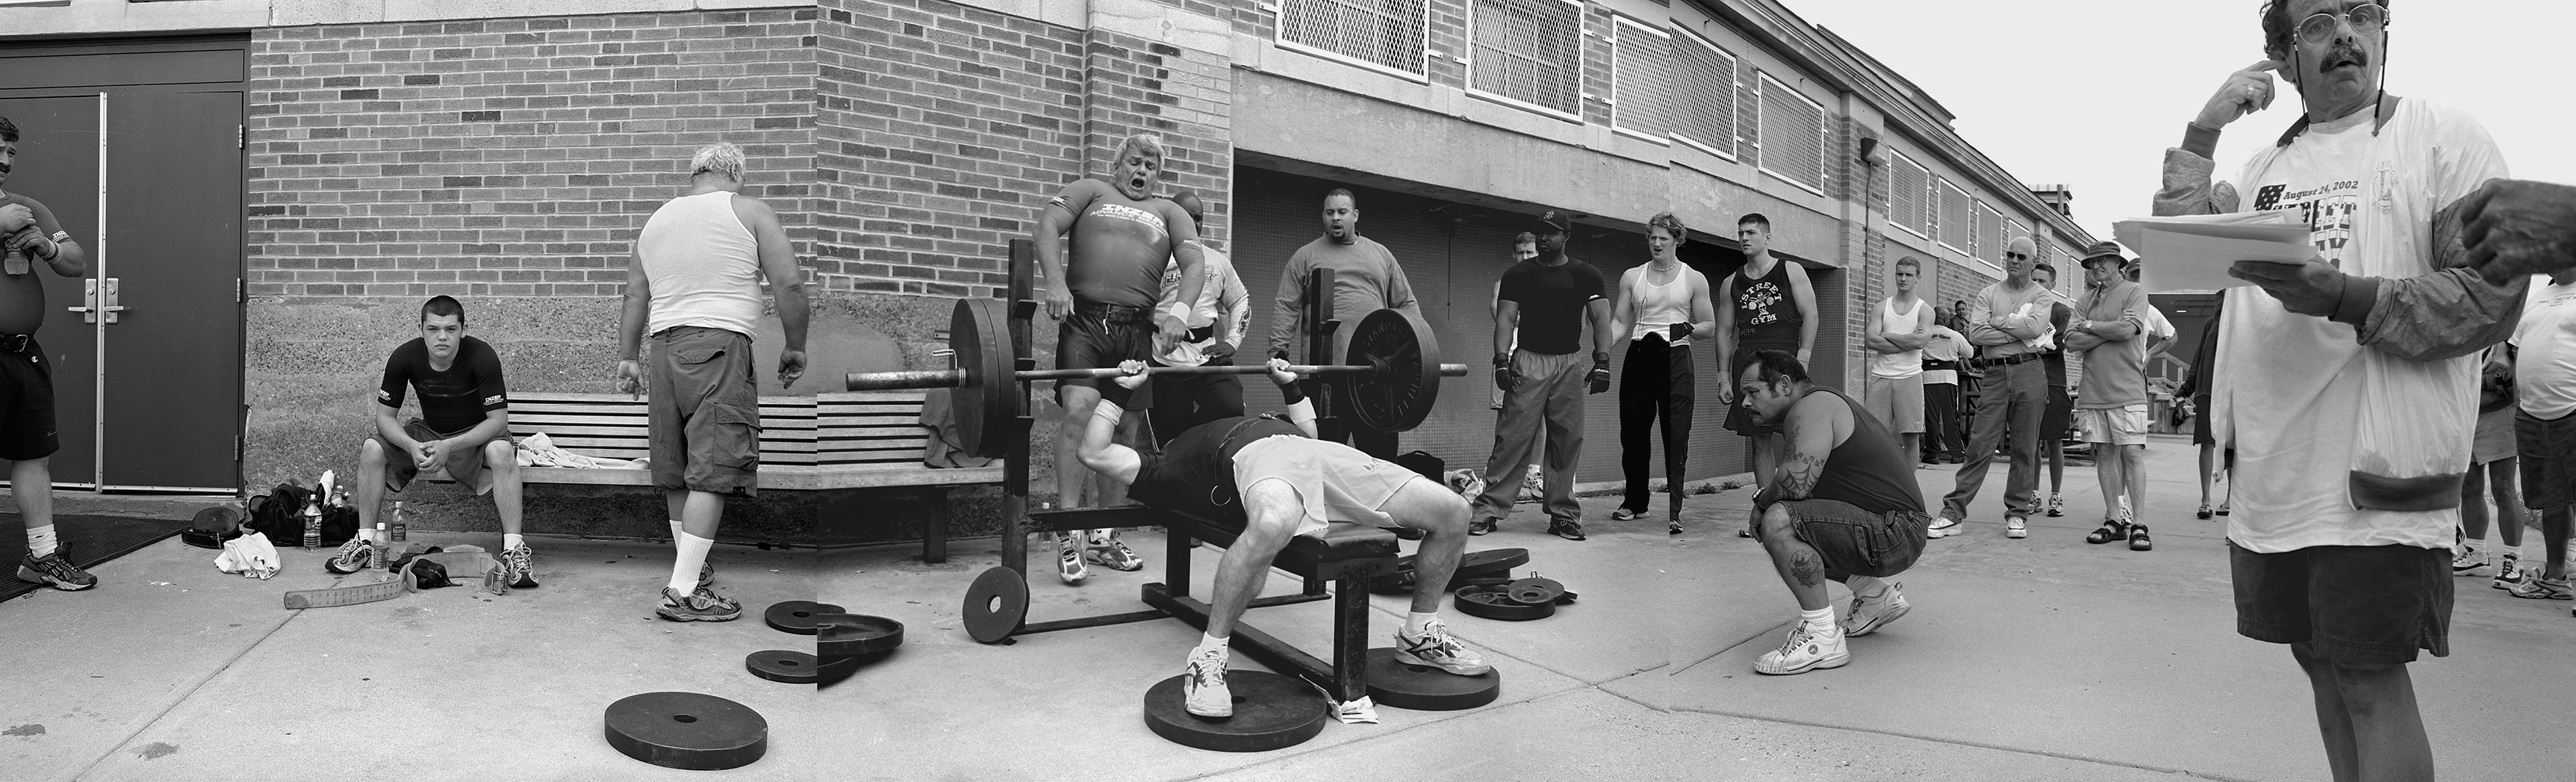 Dylan Vitone Weightlifters 2006 Archival inkjet